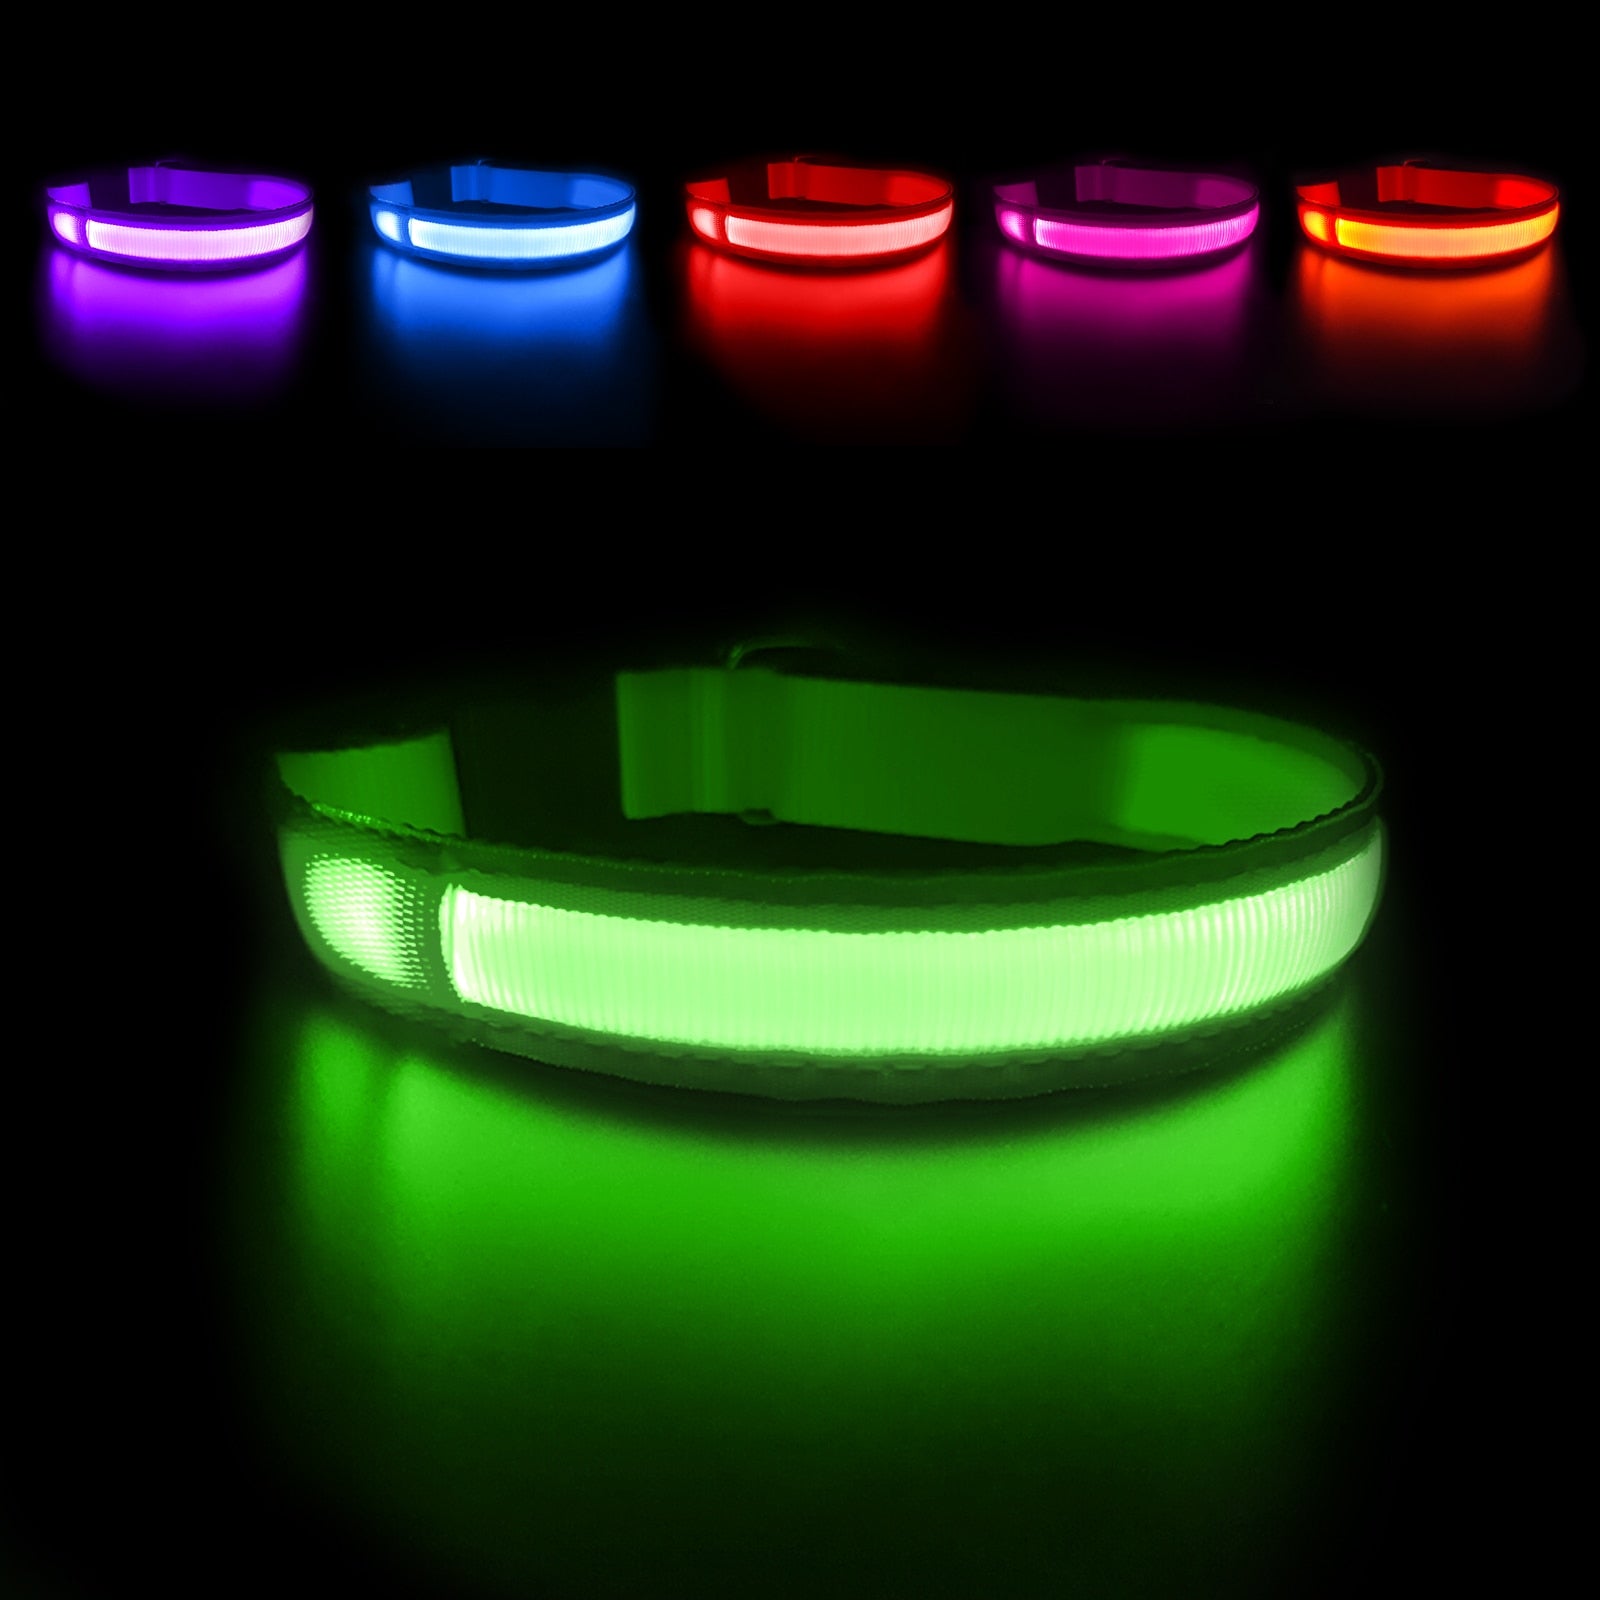 LED Hundehalsband in der Farbe Grün leuchtend.